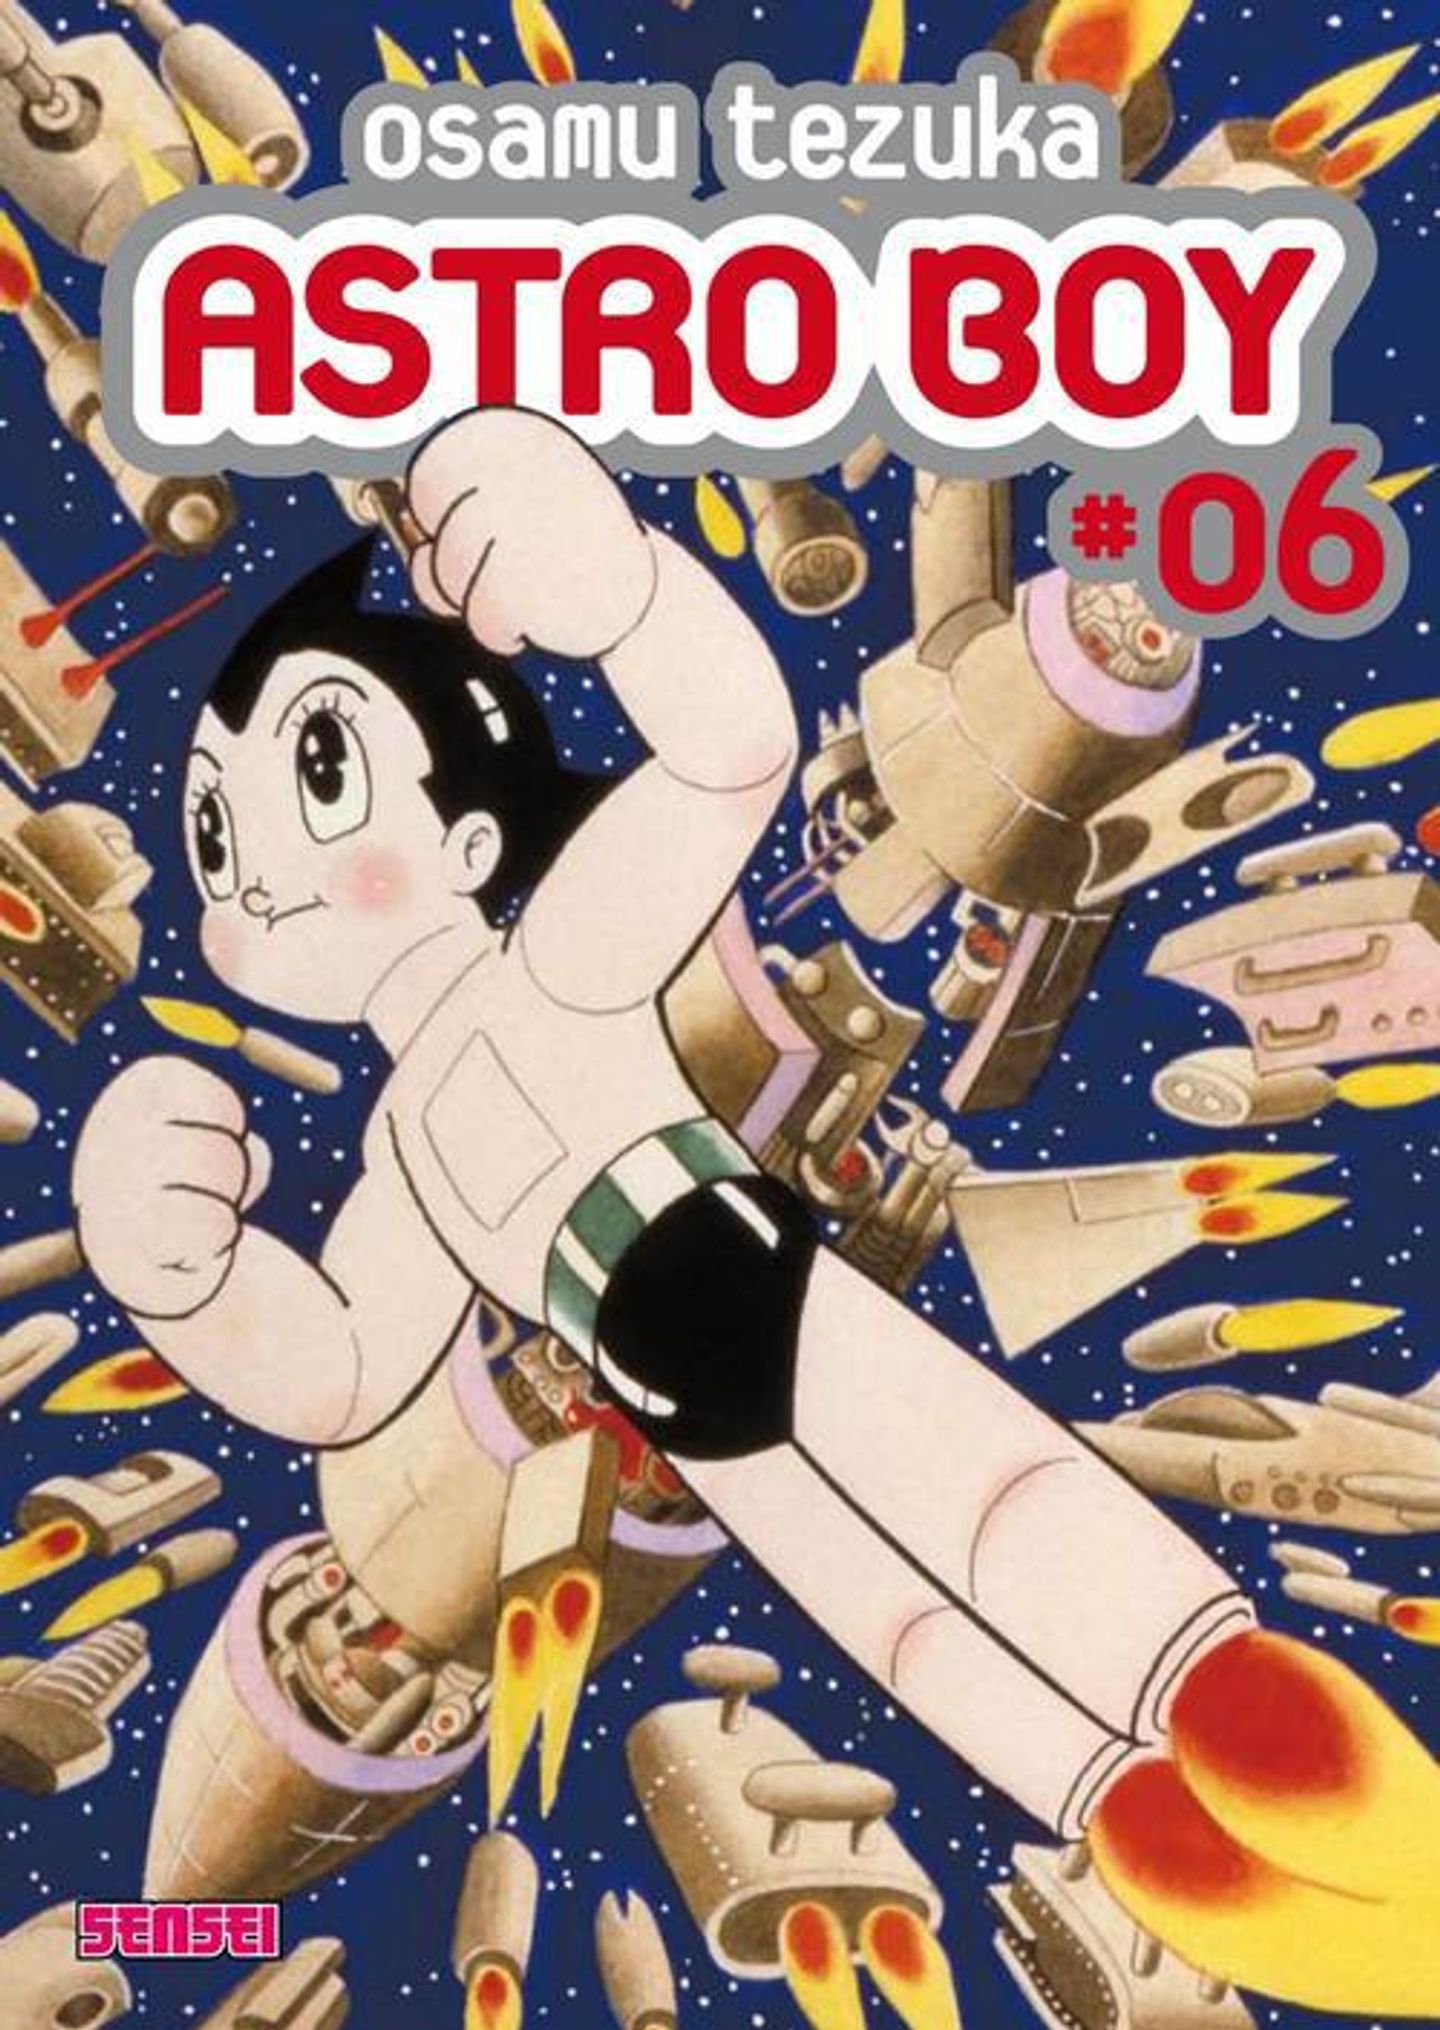 astro-boy-robot-osamu-tezuka-manga-histoire-automate-japon